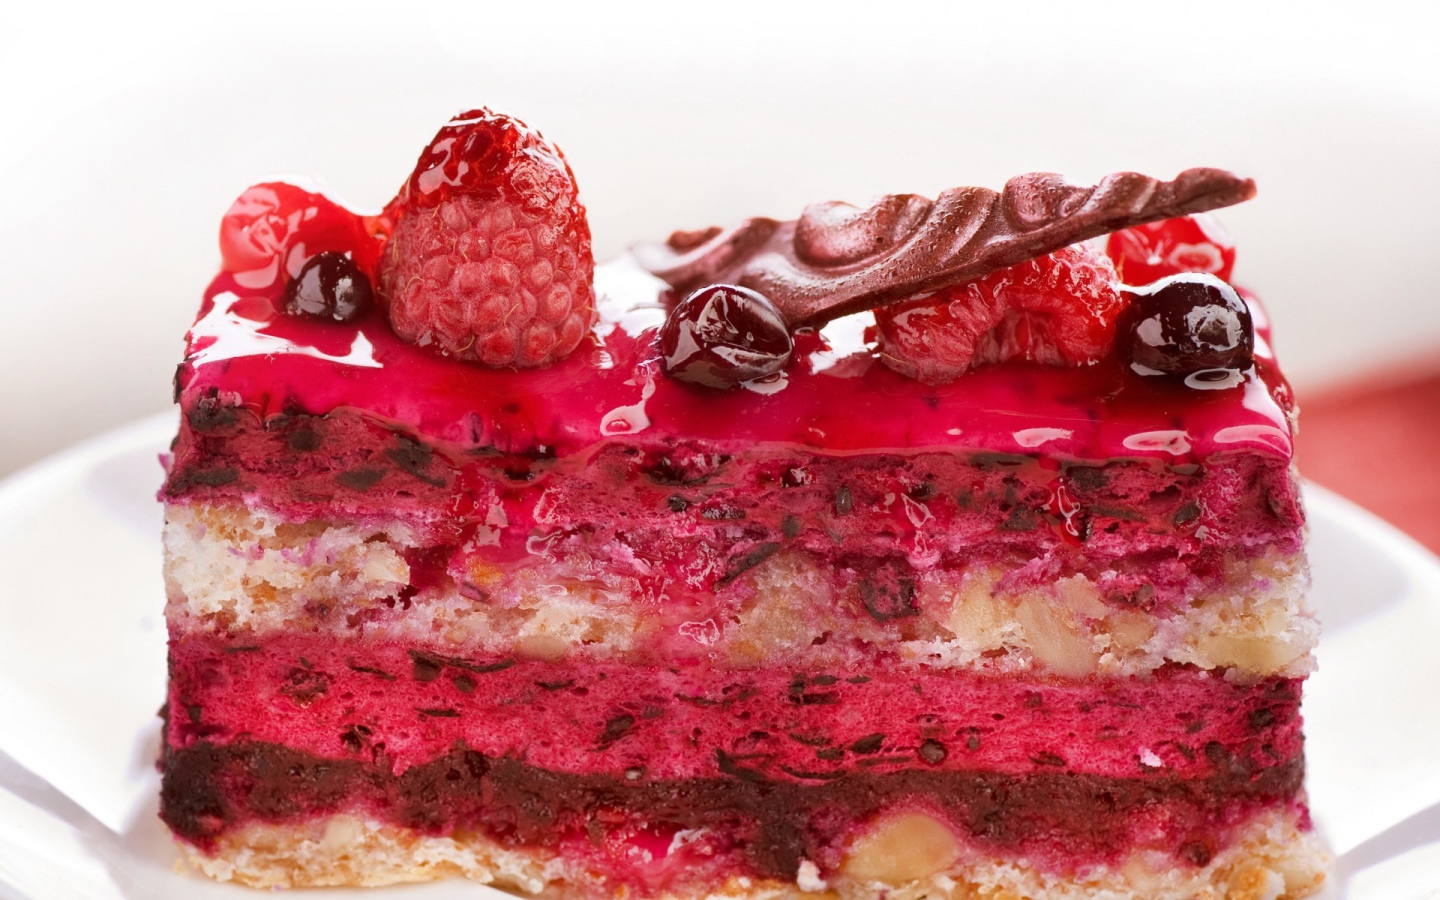 Raspberry cake